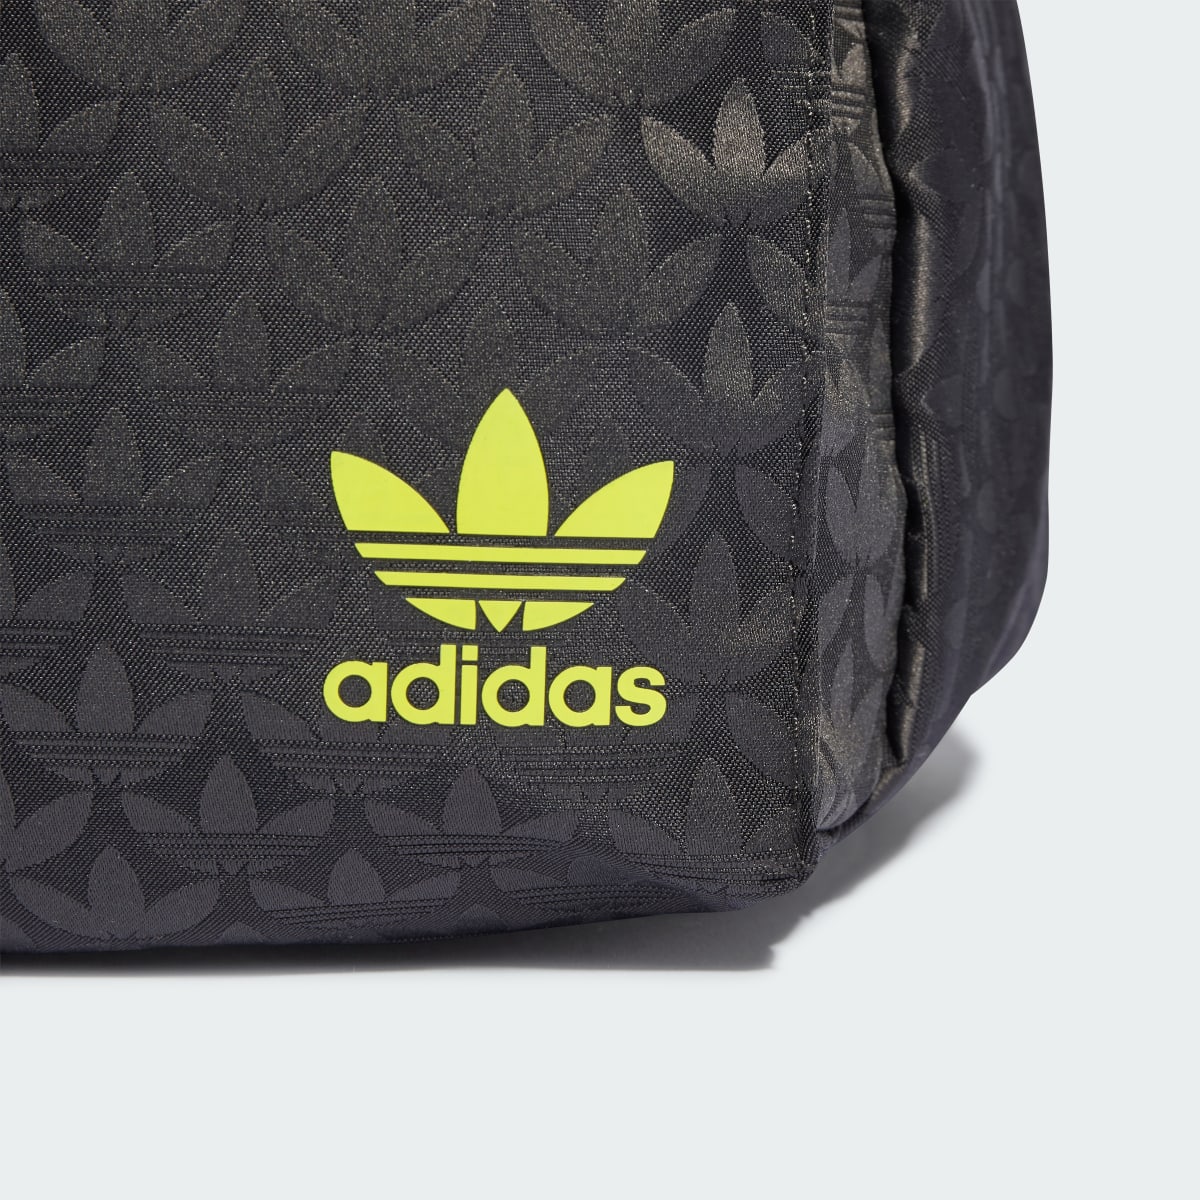 Adidas Trefoil Monogram Jacquard Backpack. 6